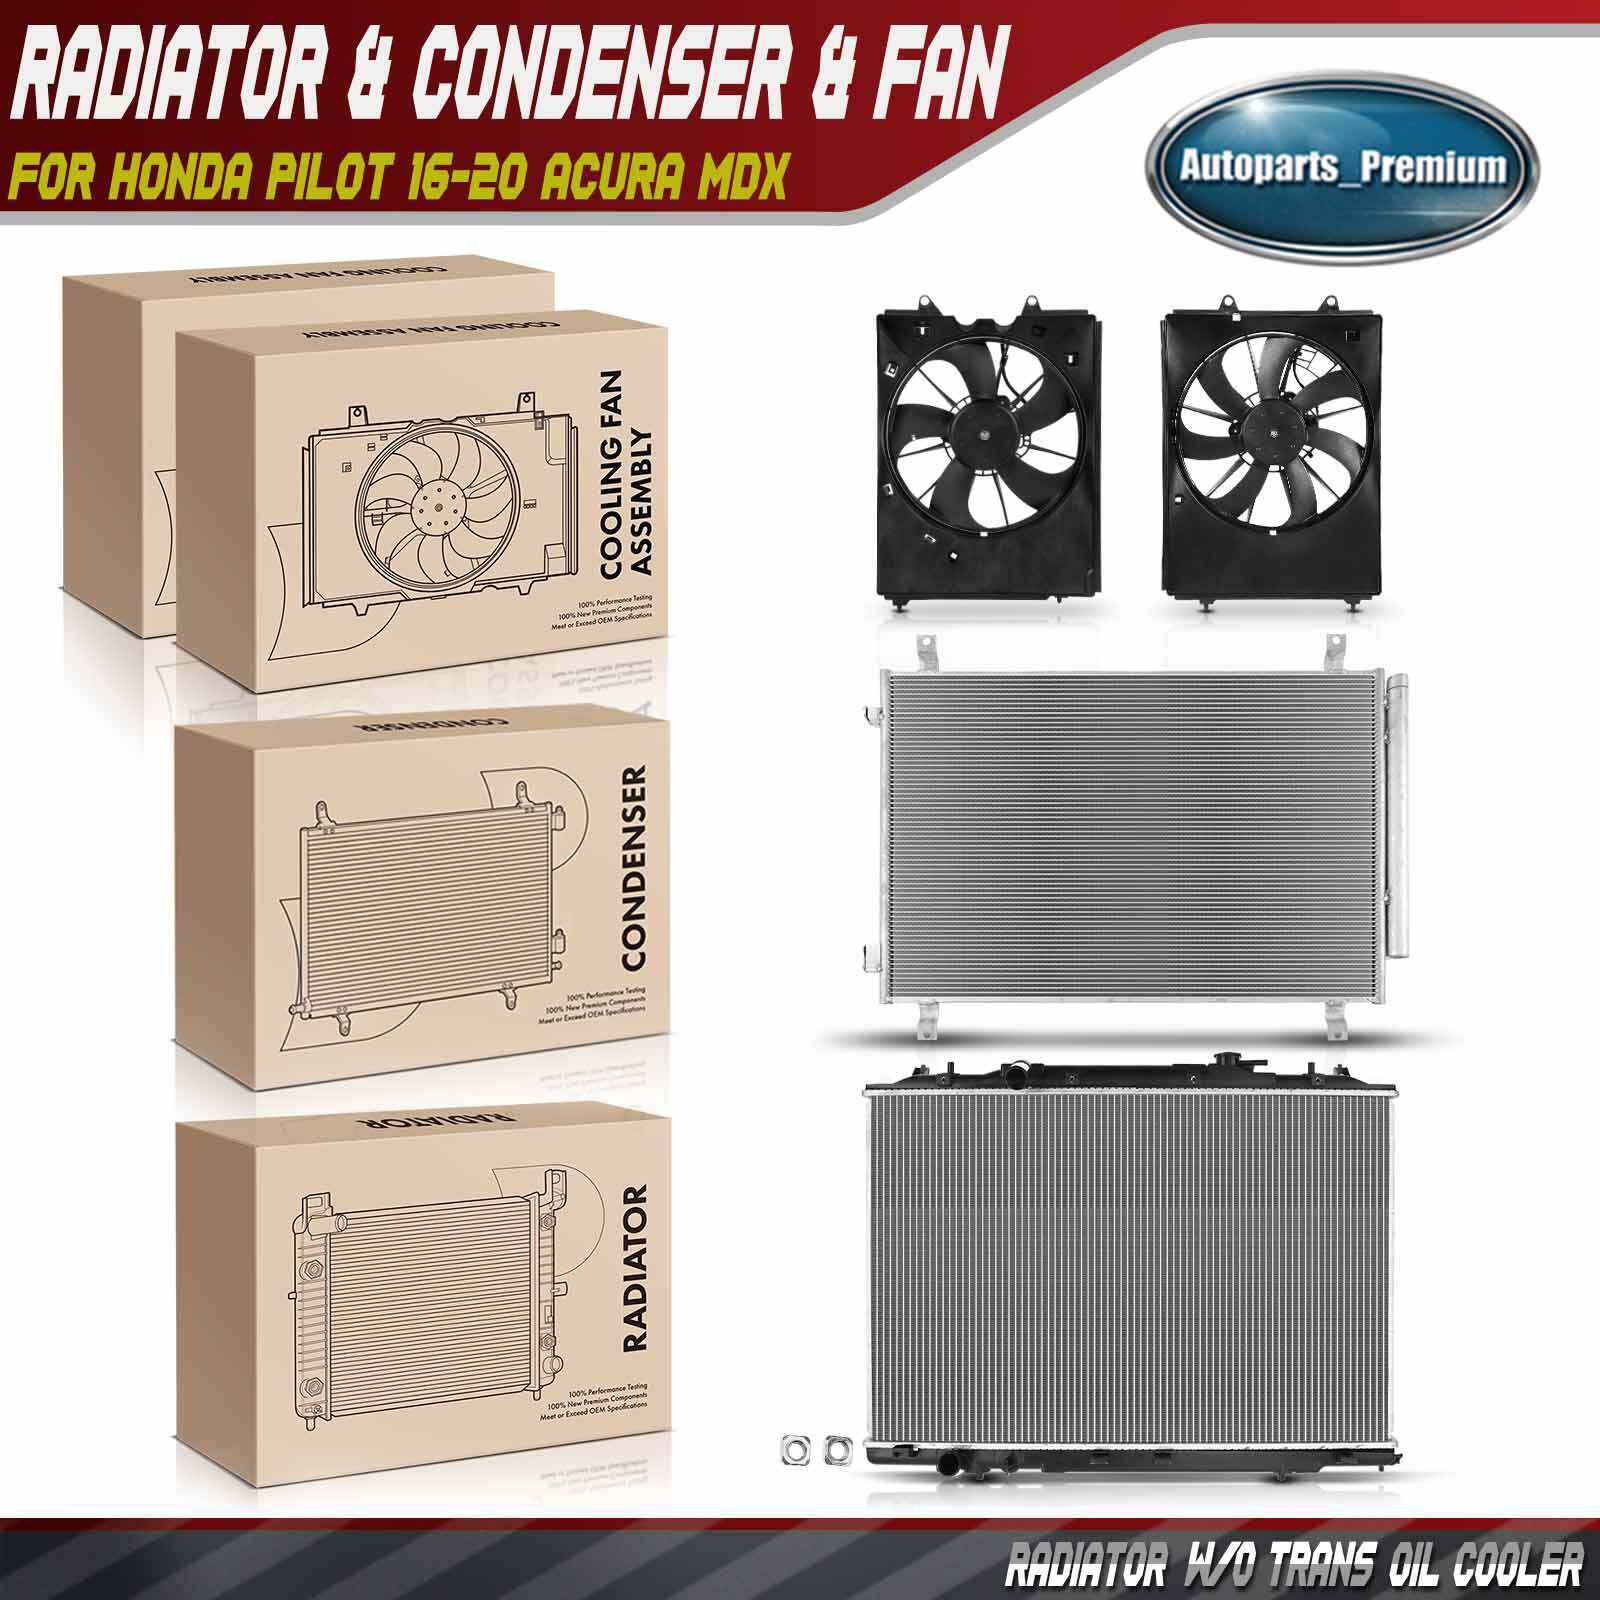 Radiator & AC Condenser & L&R Cooling Fan Kit for MDX 14-20 Honda Pilot Passport